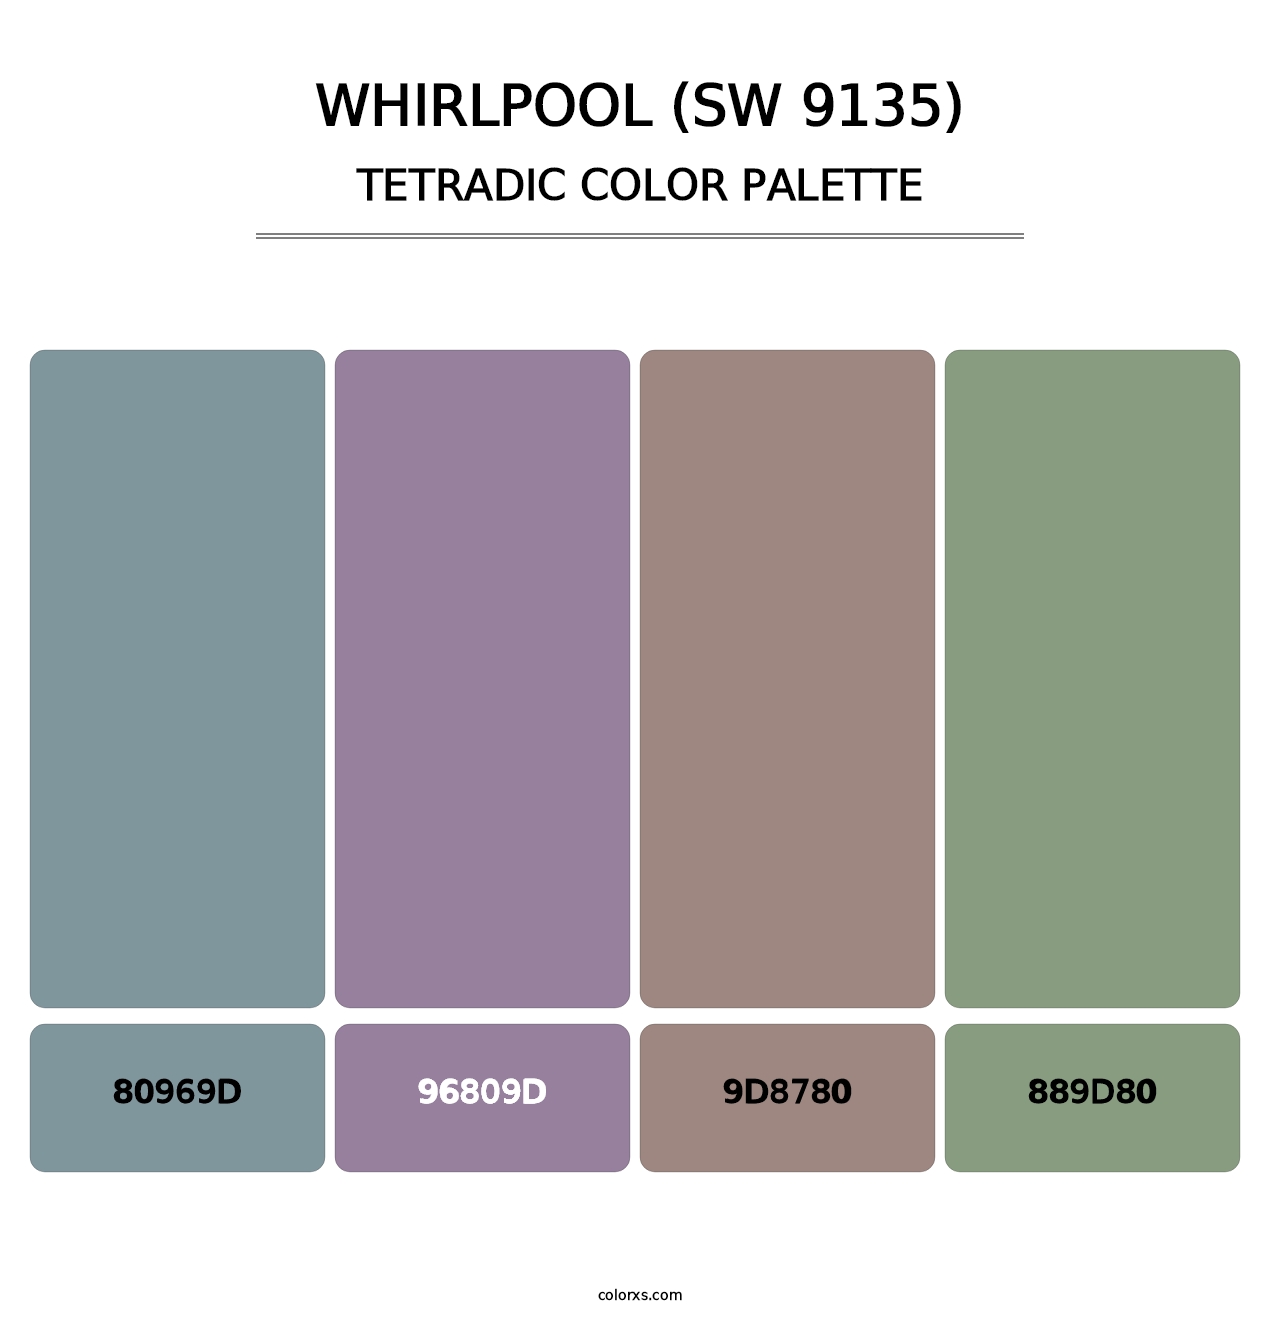 Whirlpool (SW 9135) - Tetradic Color Palette